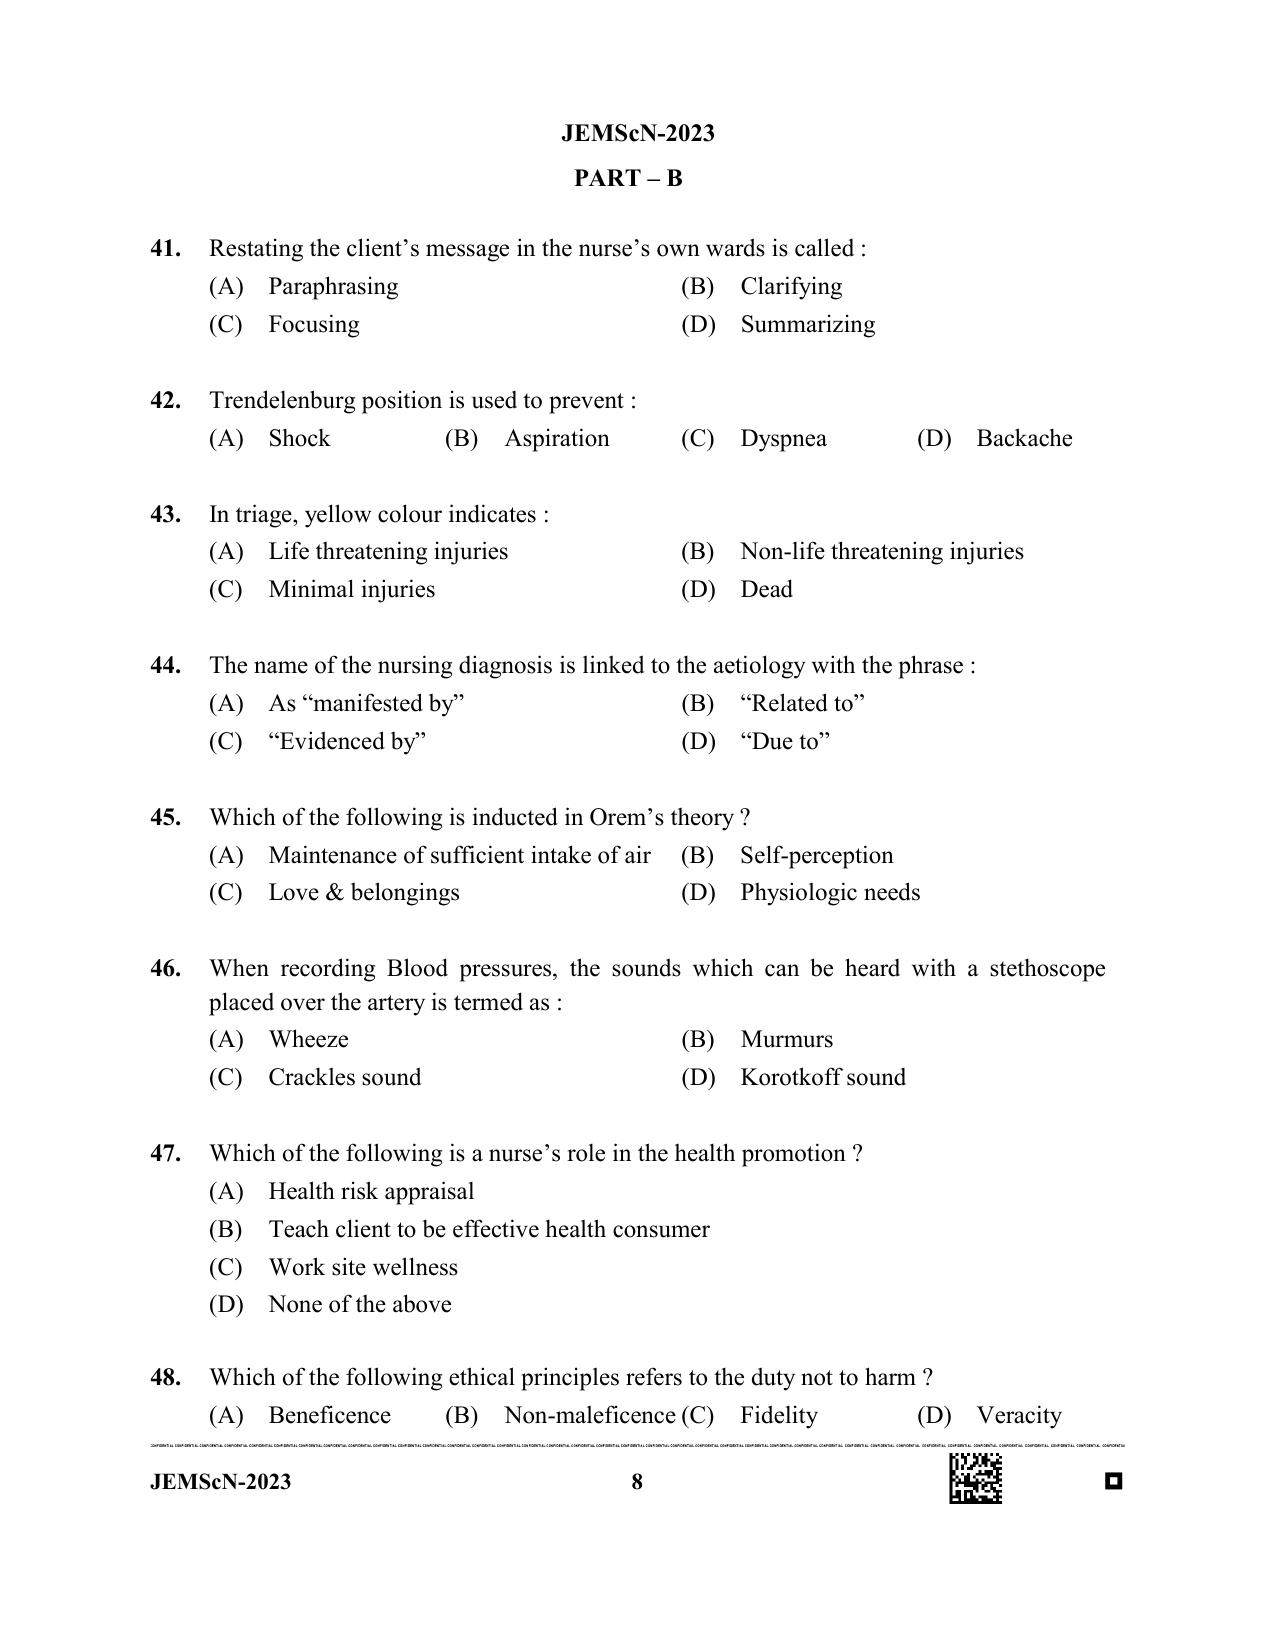 WB JEMScN 2023 Question Paper - Page 8